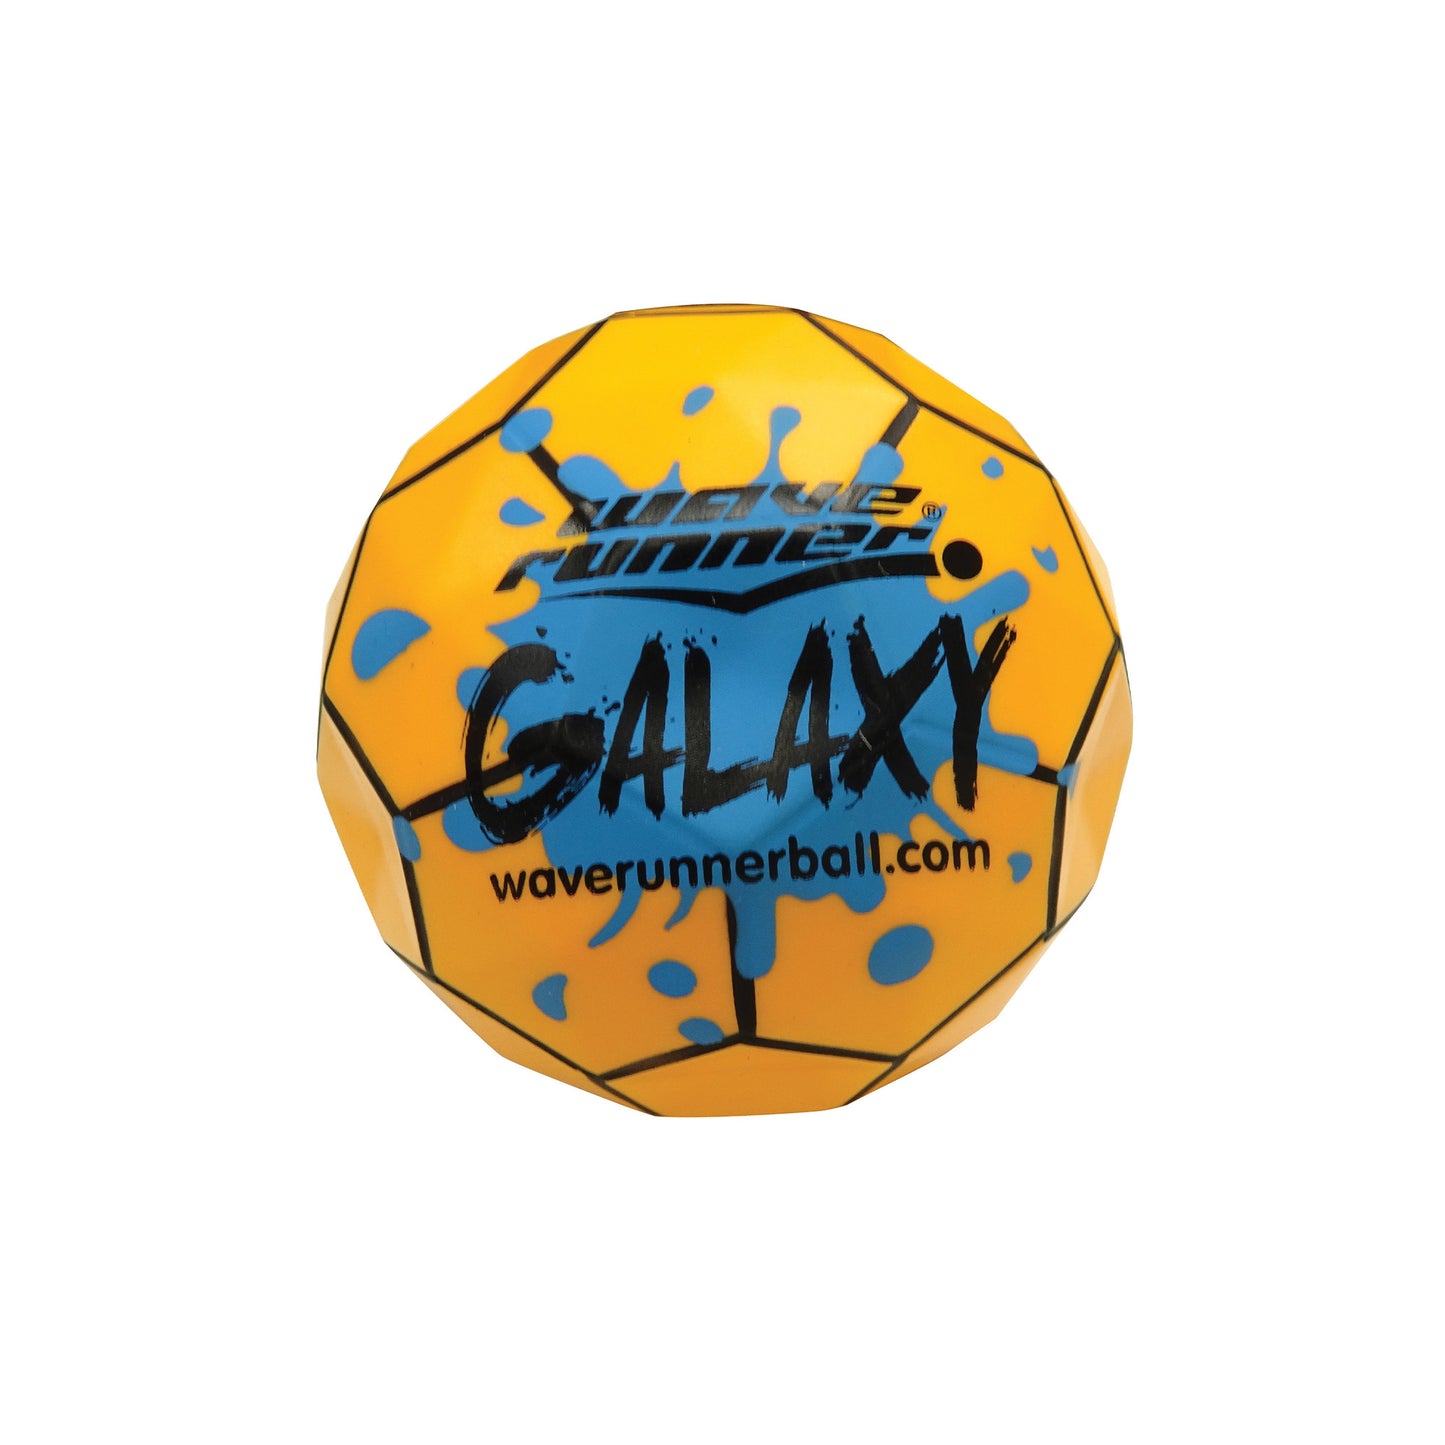 4 Pack - Galaxy Ball (Random Color)